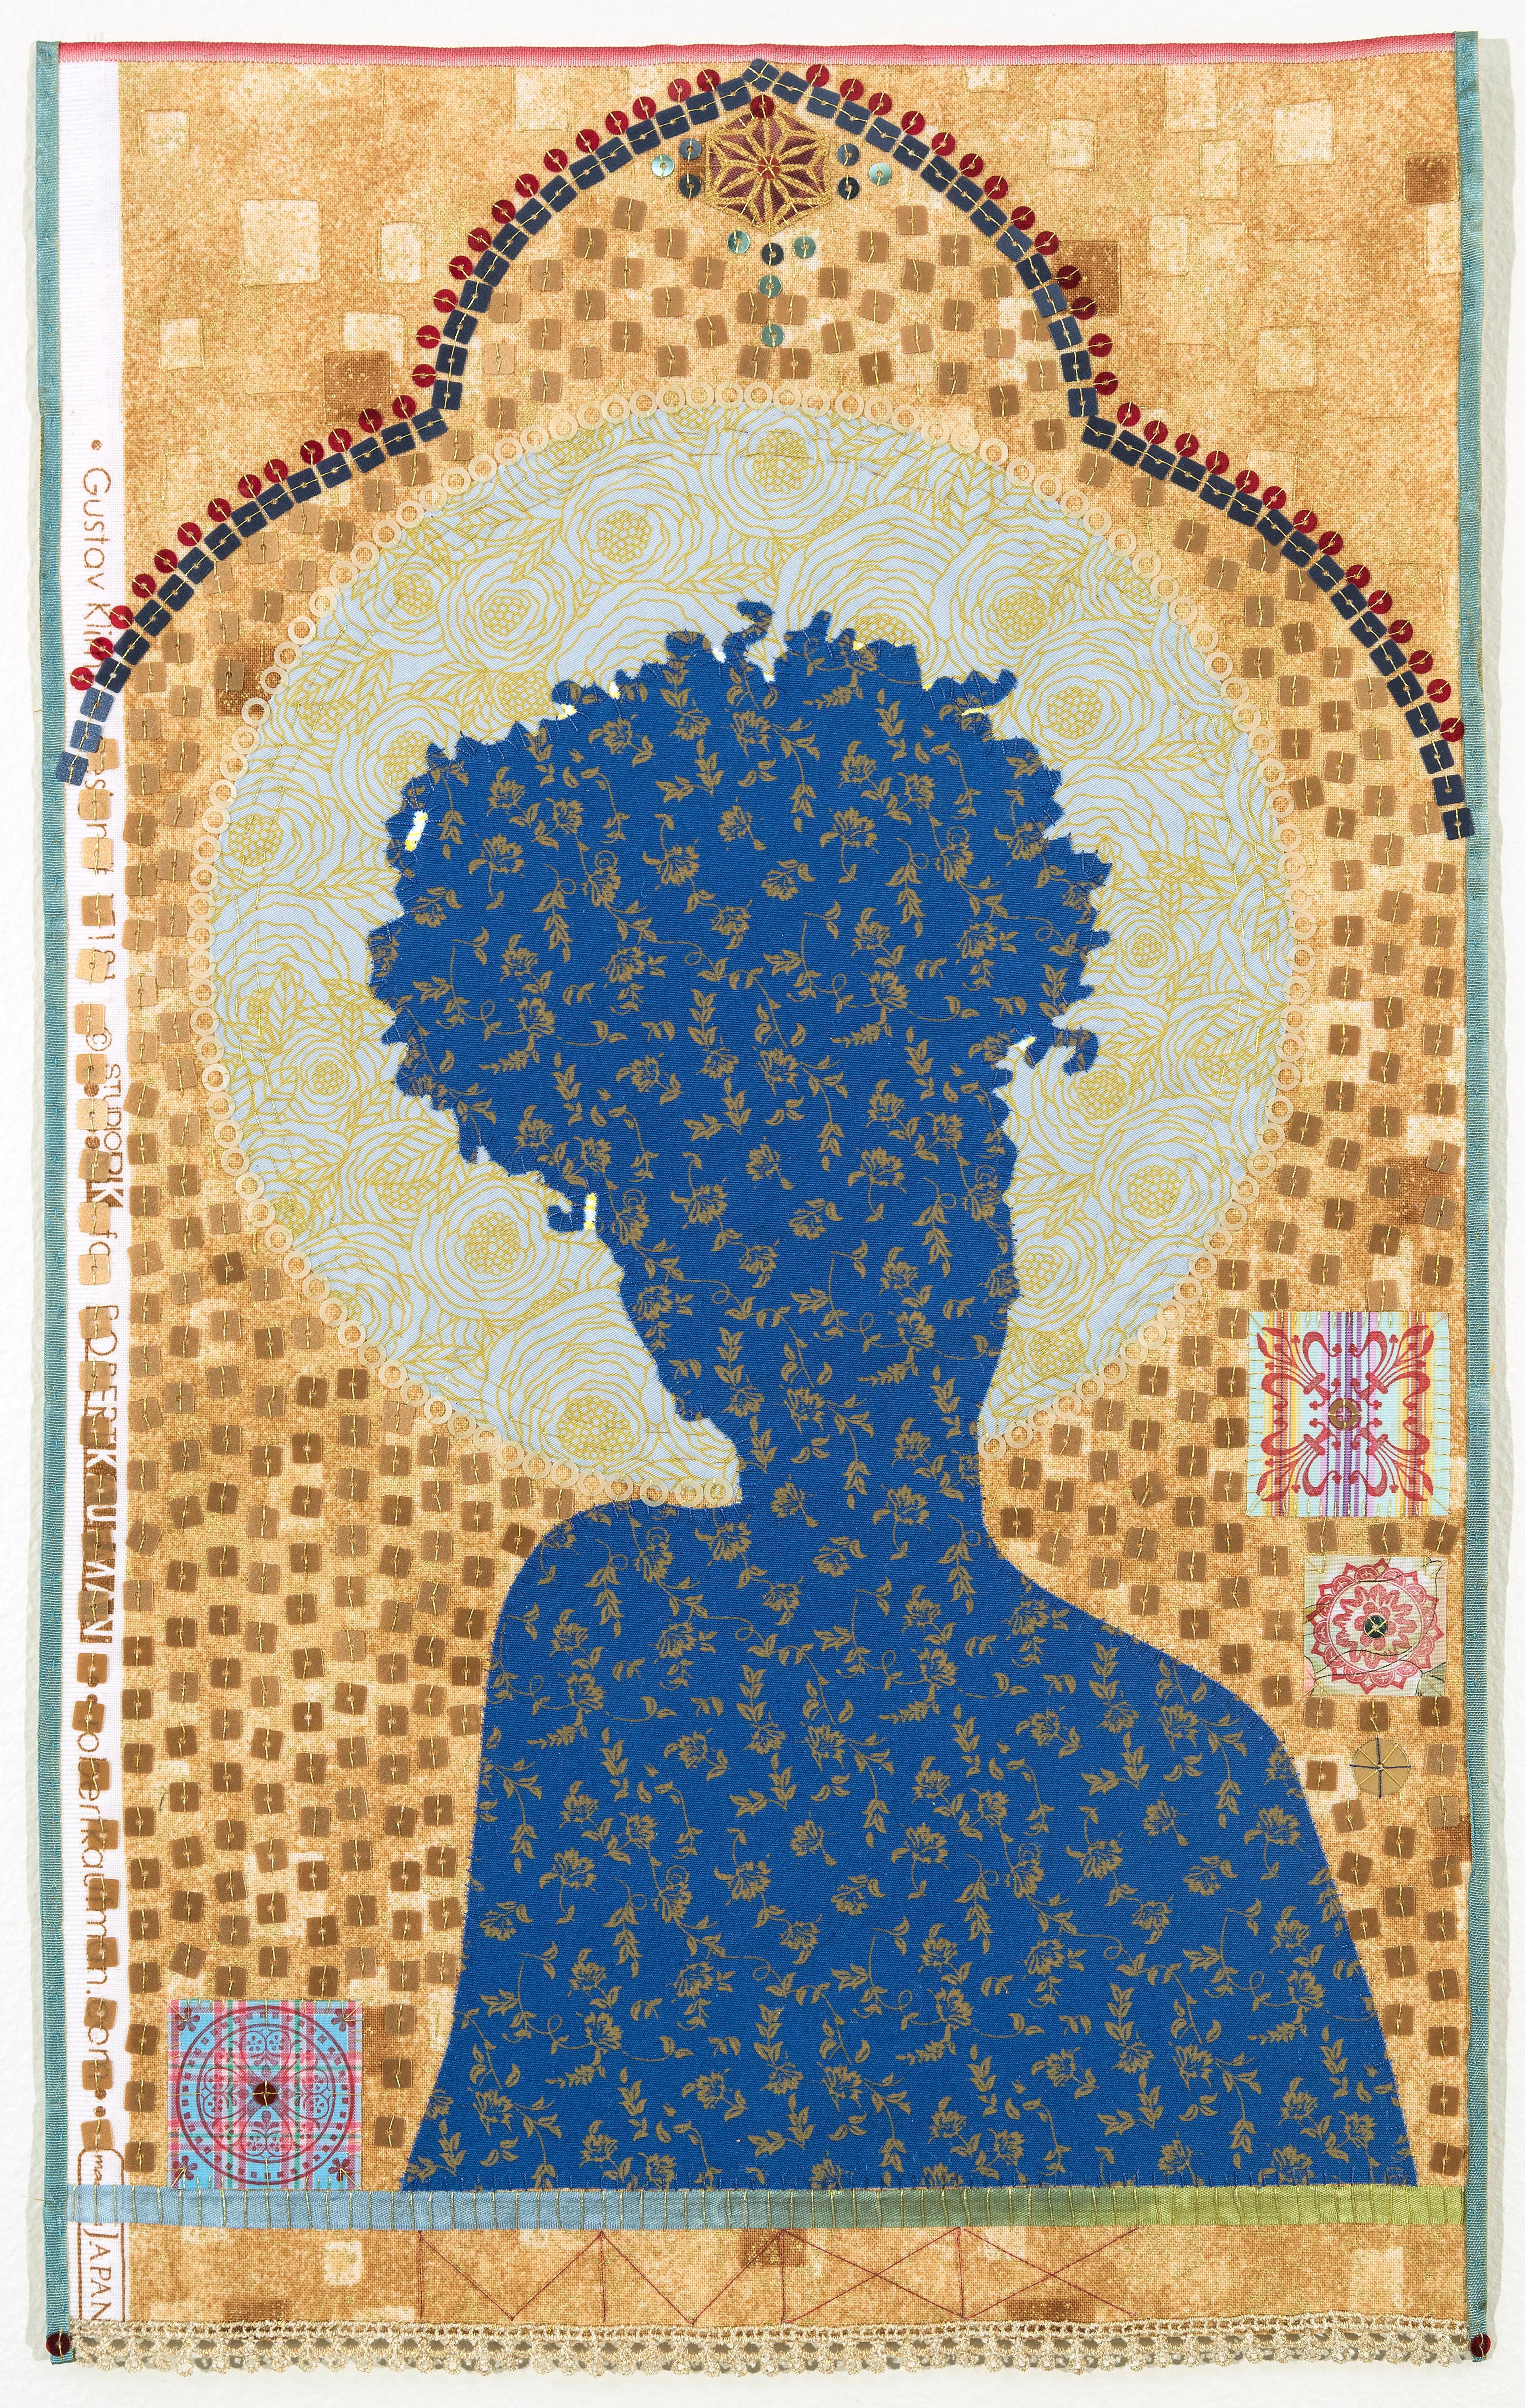 Jan Testori - Markman Figurative Sculpture – Unbenannt MM9, Silhouette, Muster, Textil, Symbol, Gold, Blau, Rot